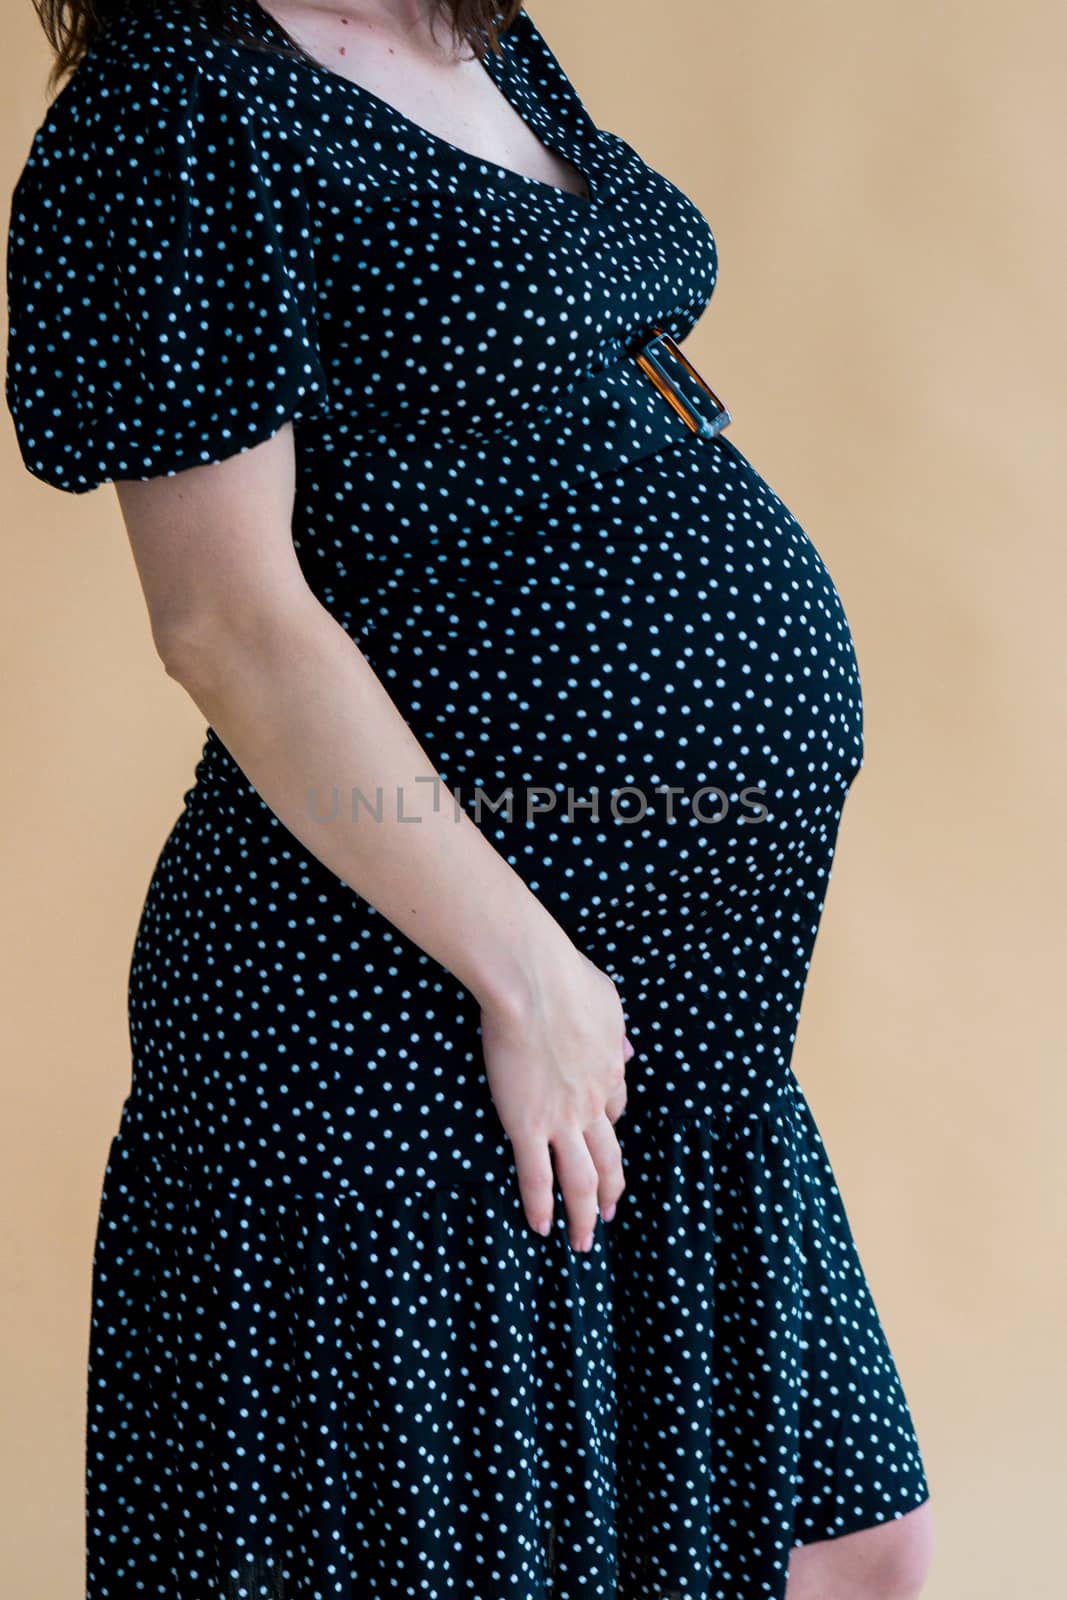 pregnant young woman in dark dress by alexandr_sorokin